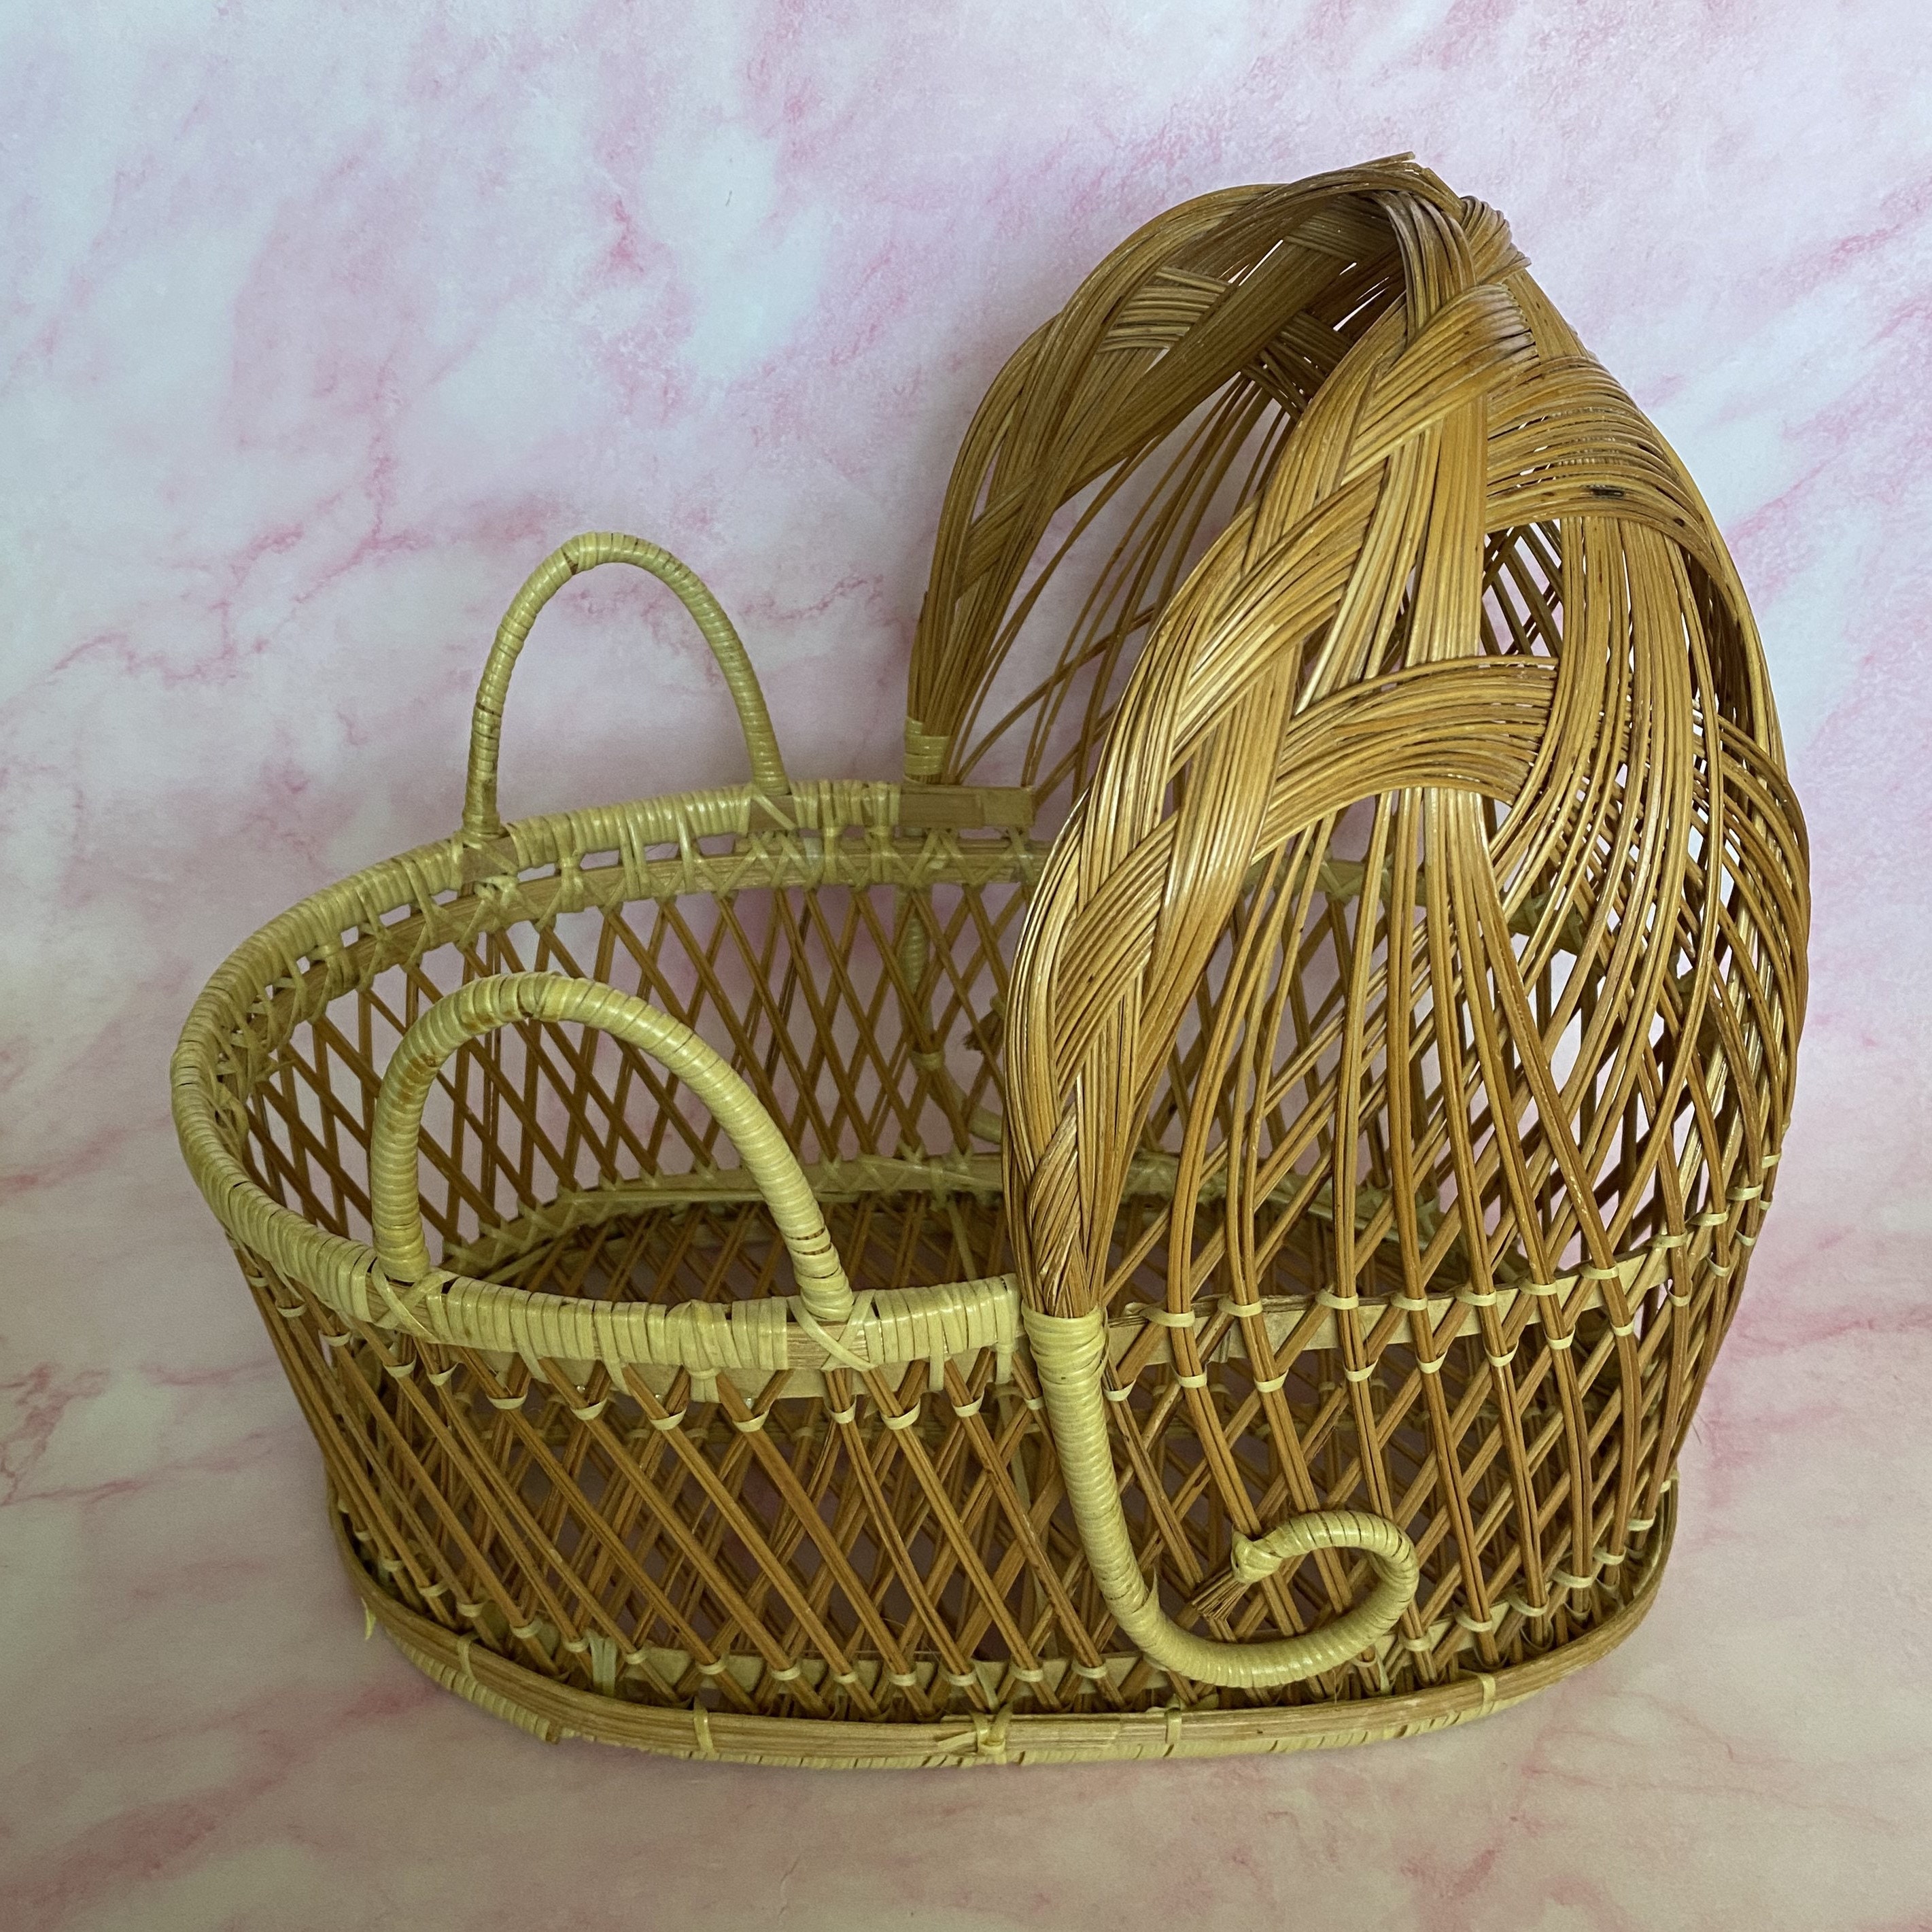 Badger Basket Natural Moses Basket with Hood and Brown Polka Dot